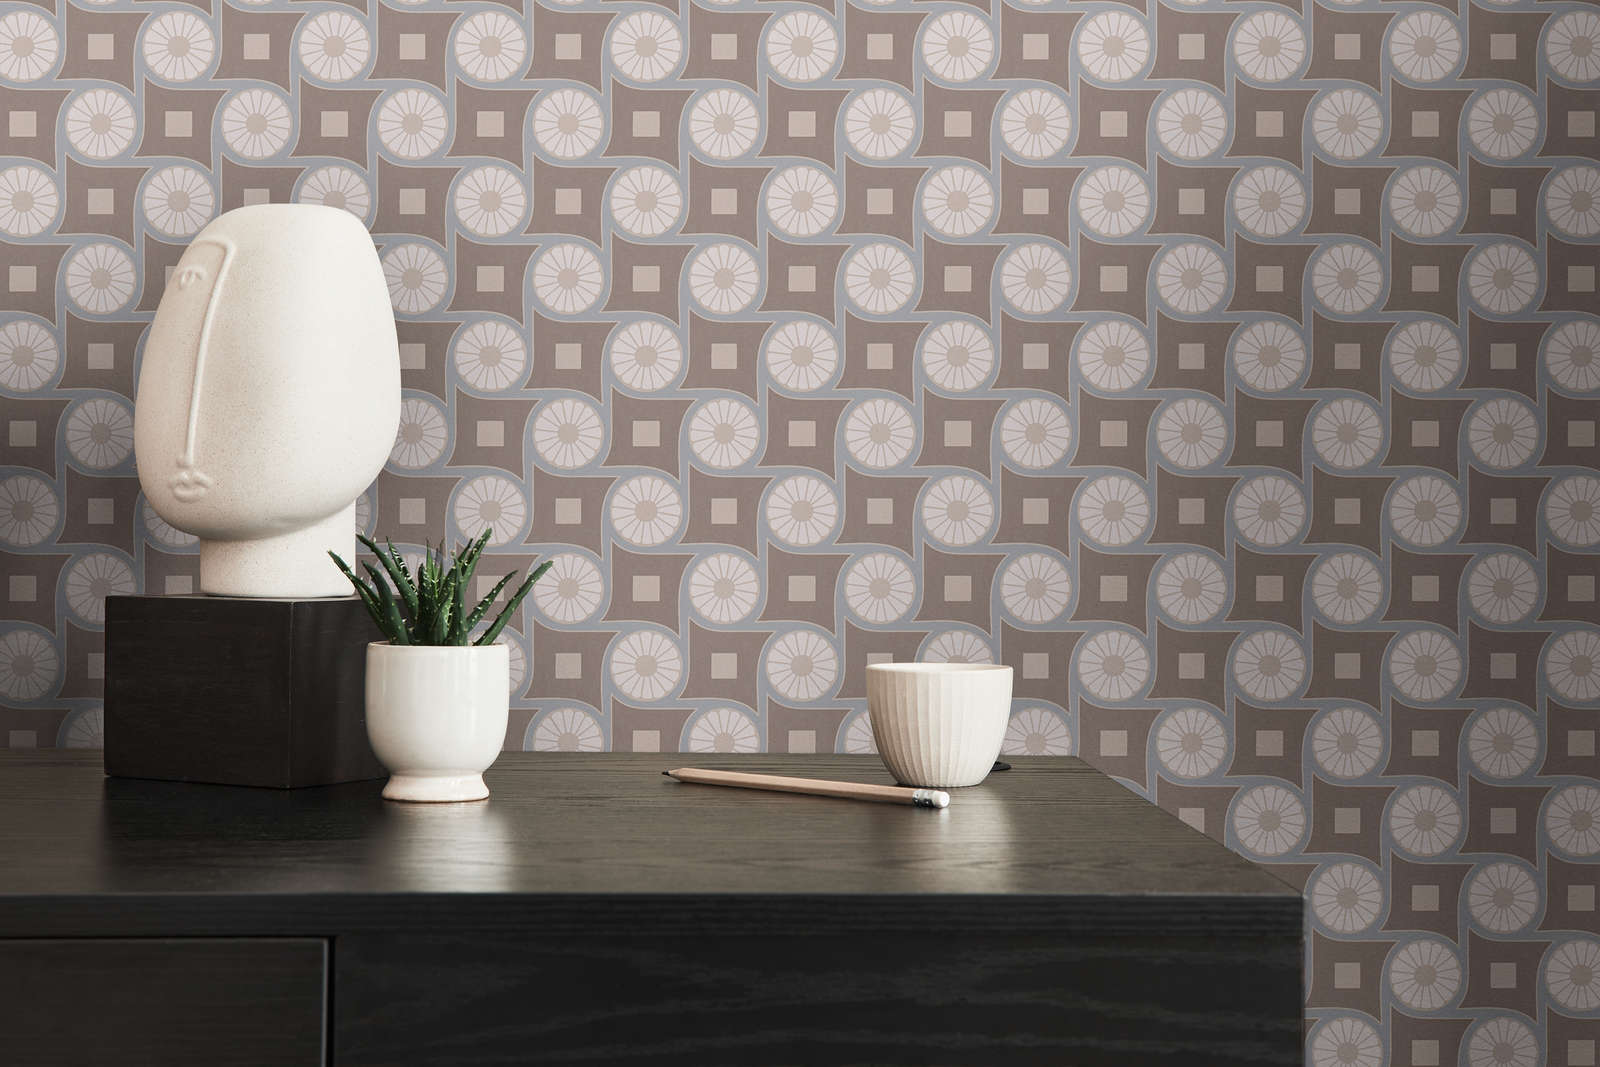             Non-woven wallpaper with retro pattern square & circle - grey, blue, white
        